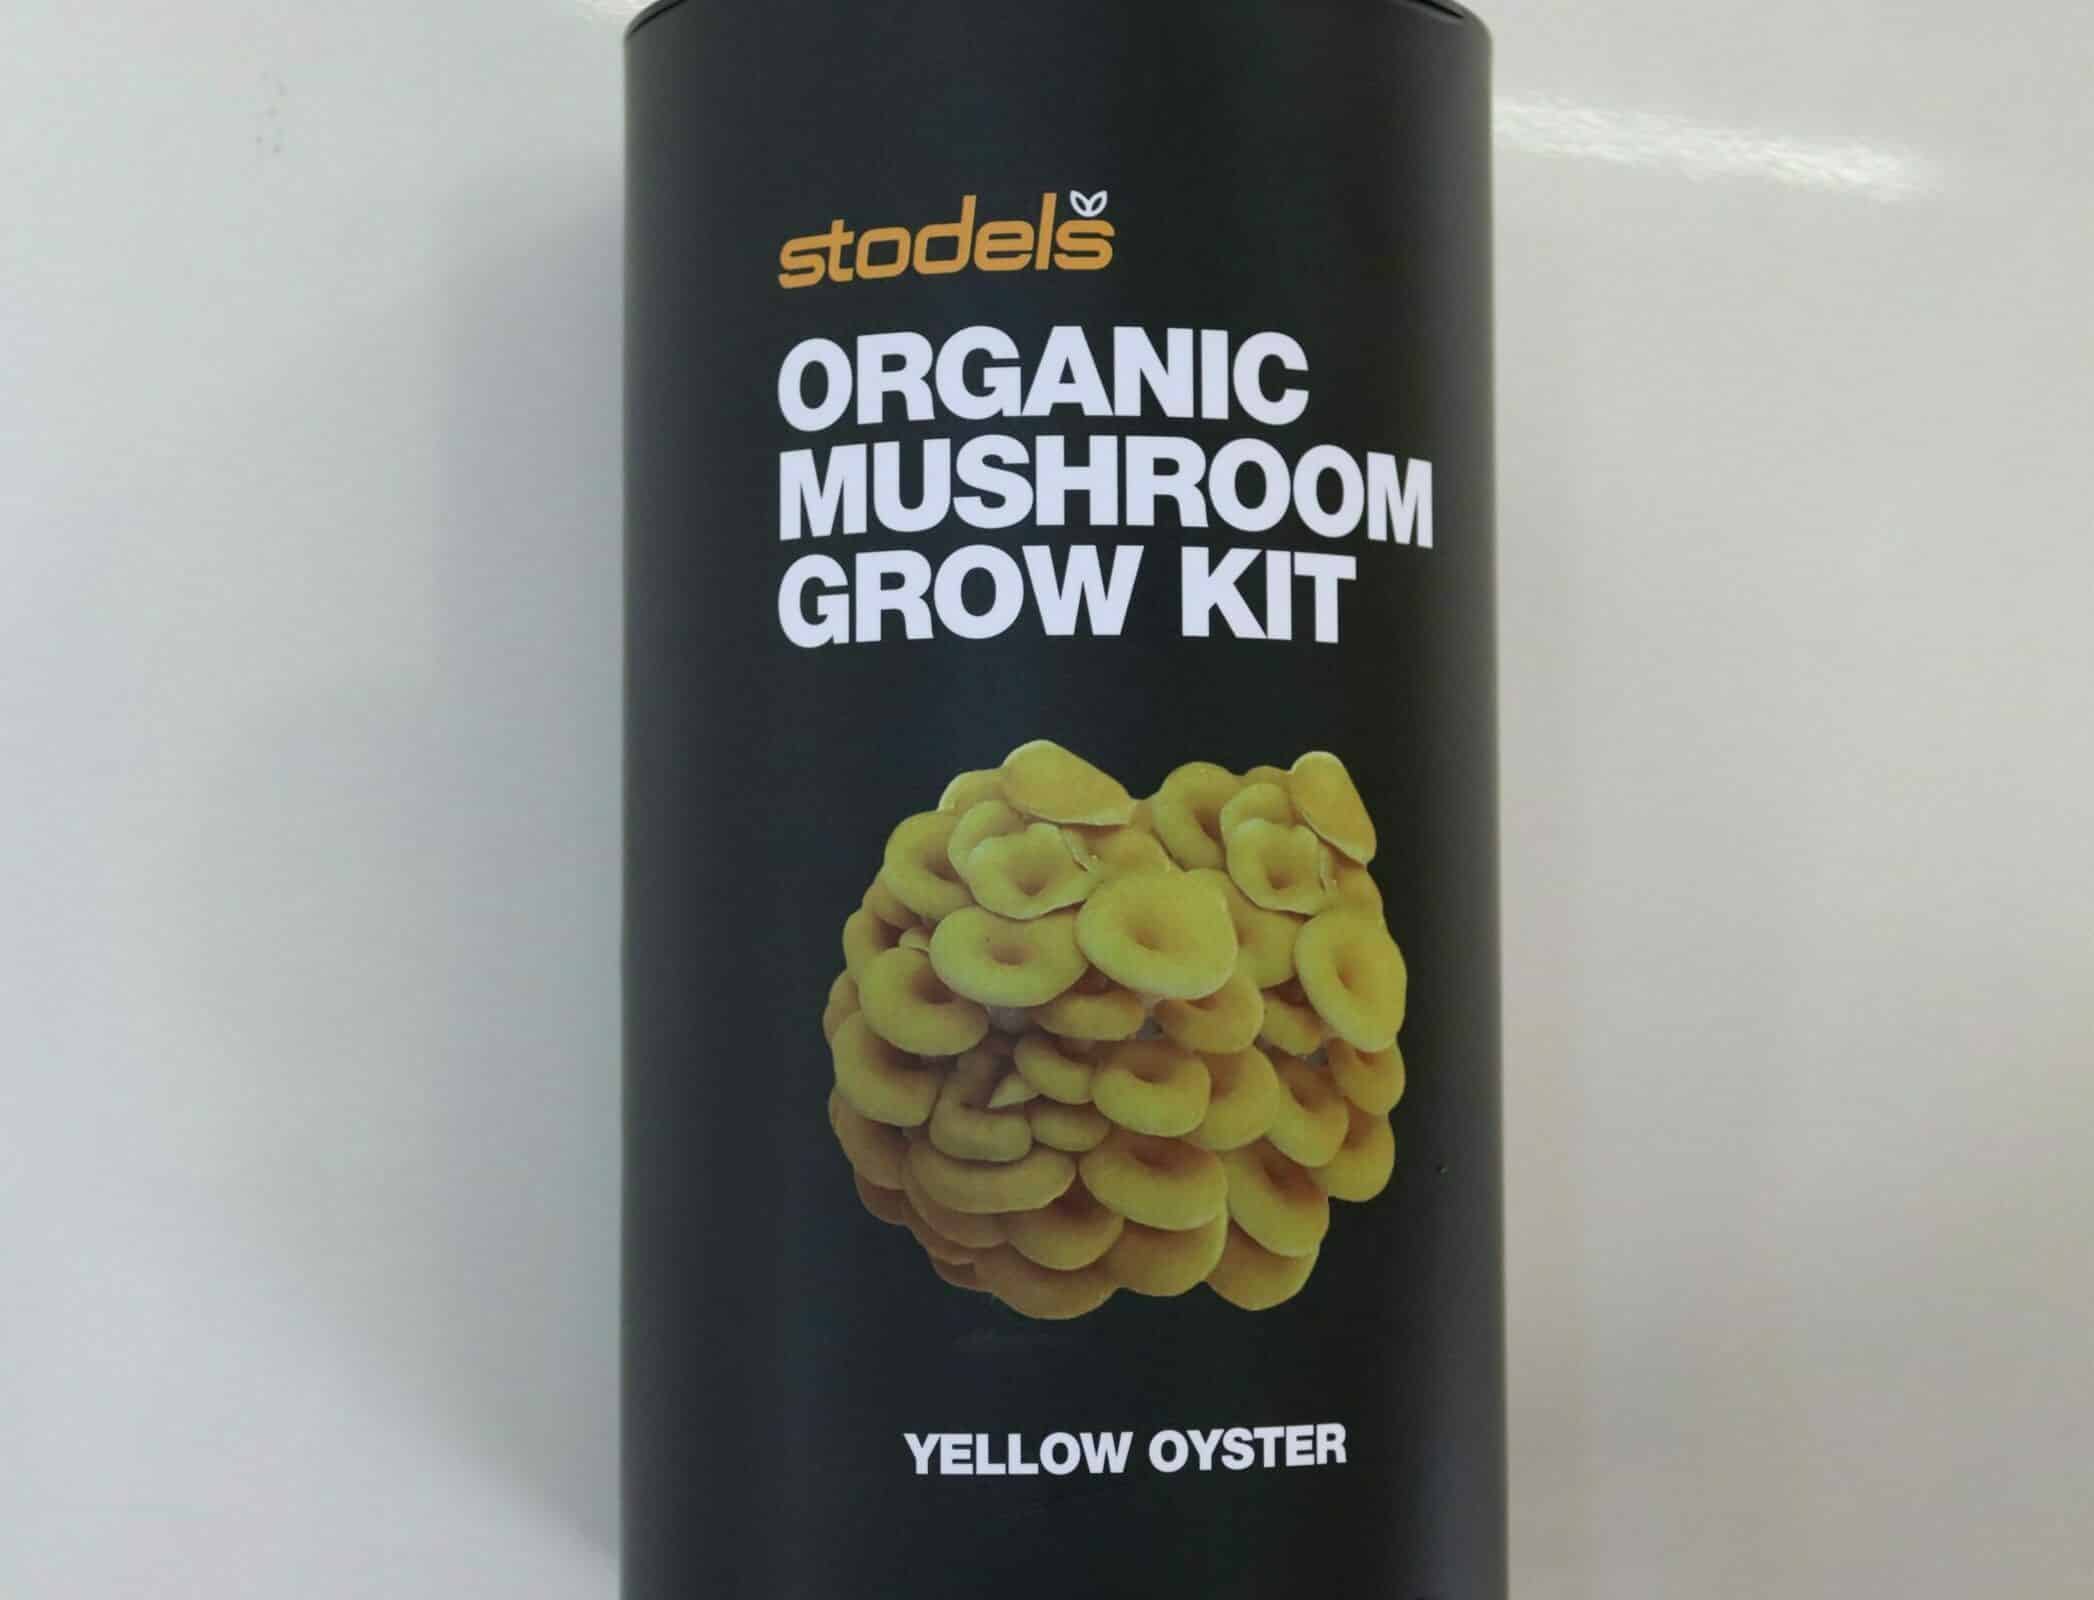 Stodels organic mushroom grow kit yellow oyster in a black tube